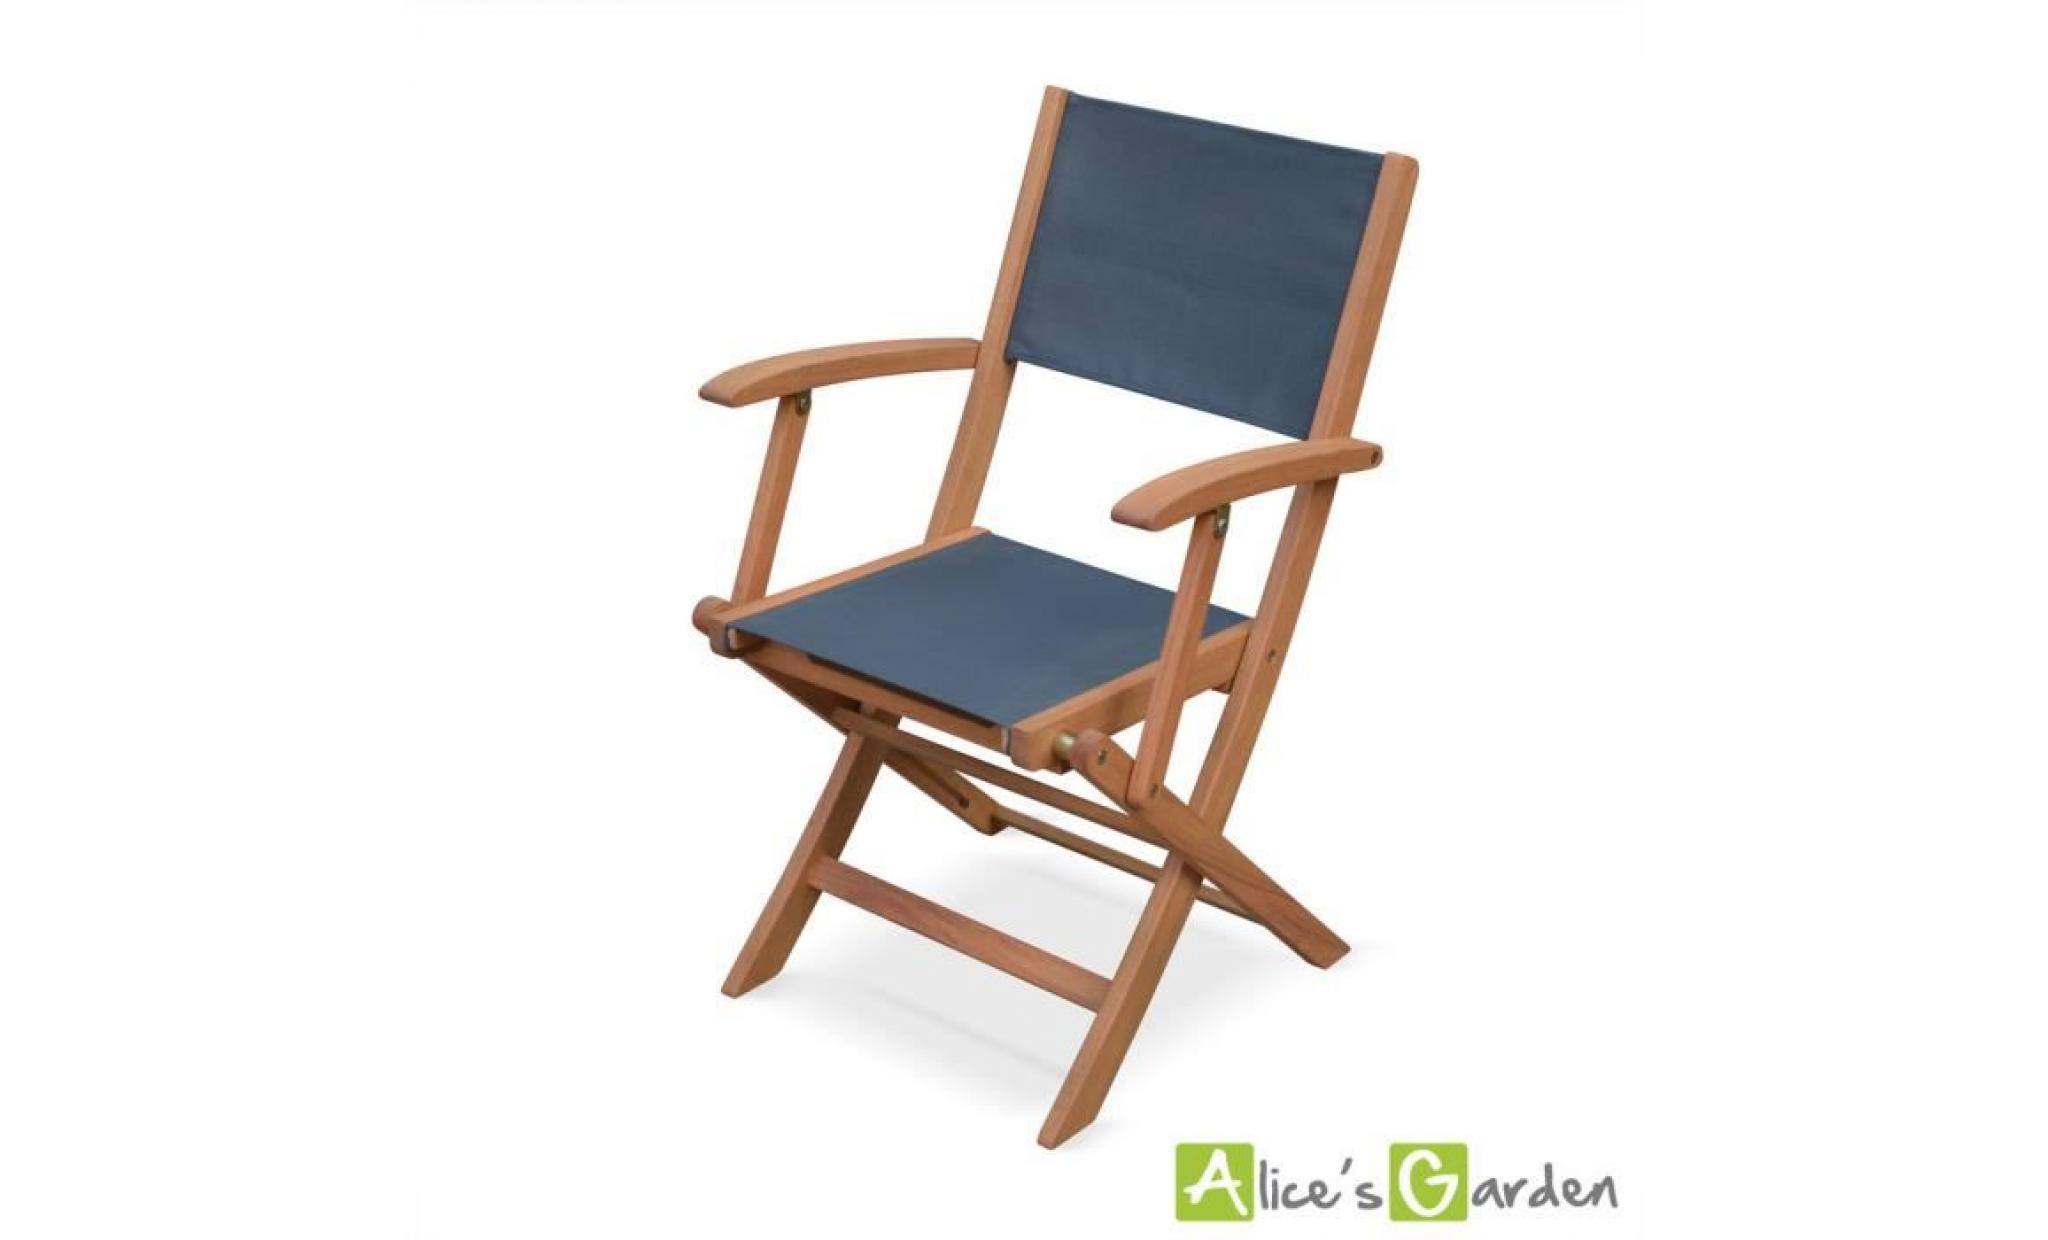 Salon de jardin teck Ecograde Almeria, 6 chaises et 2 fauteuils